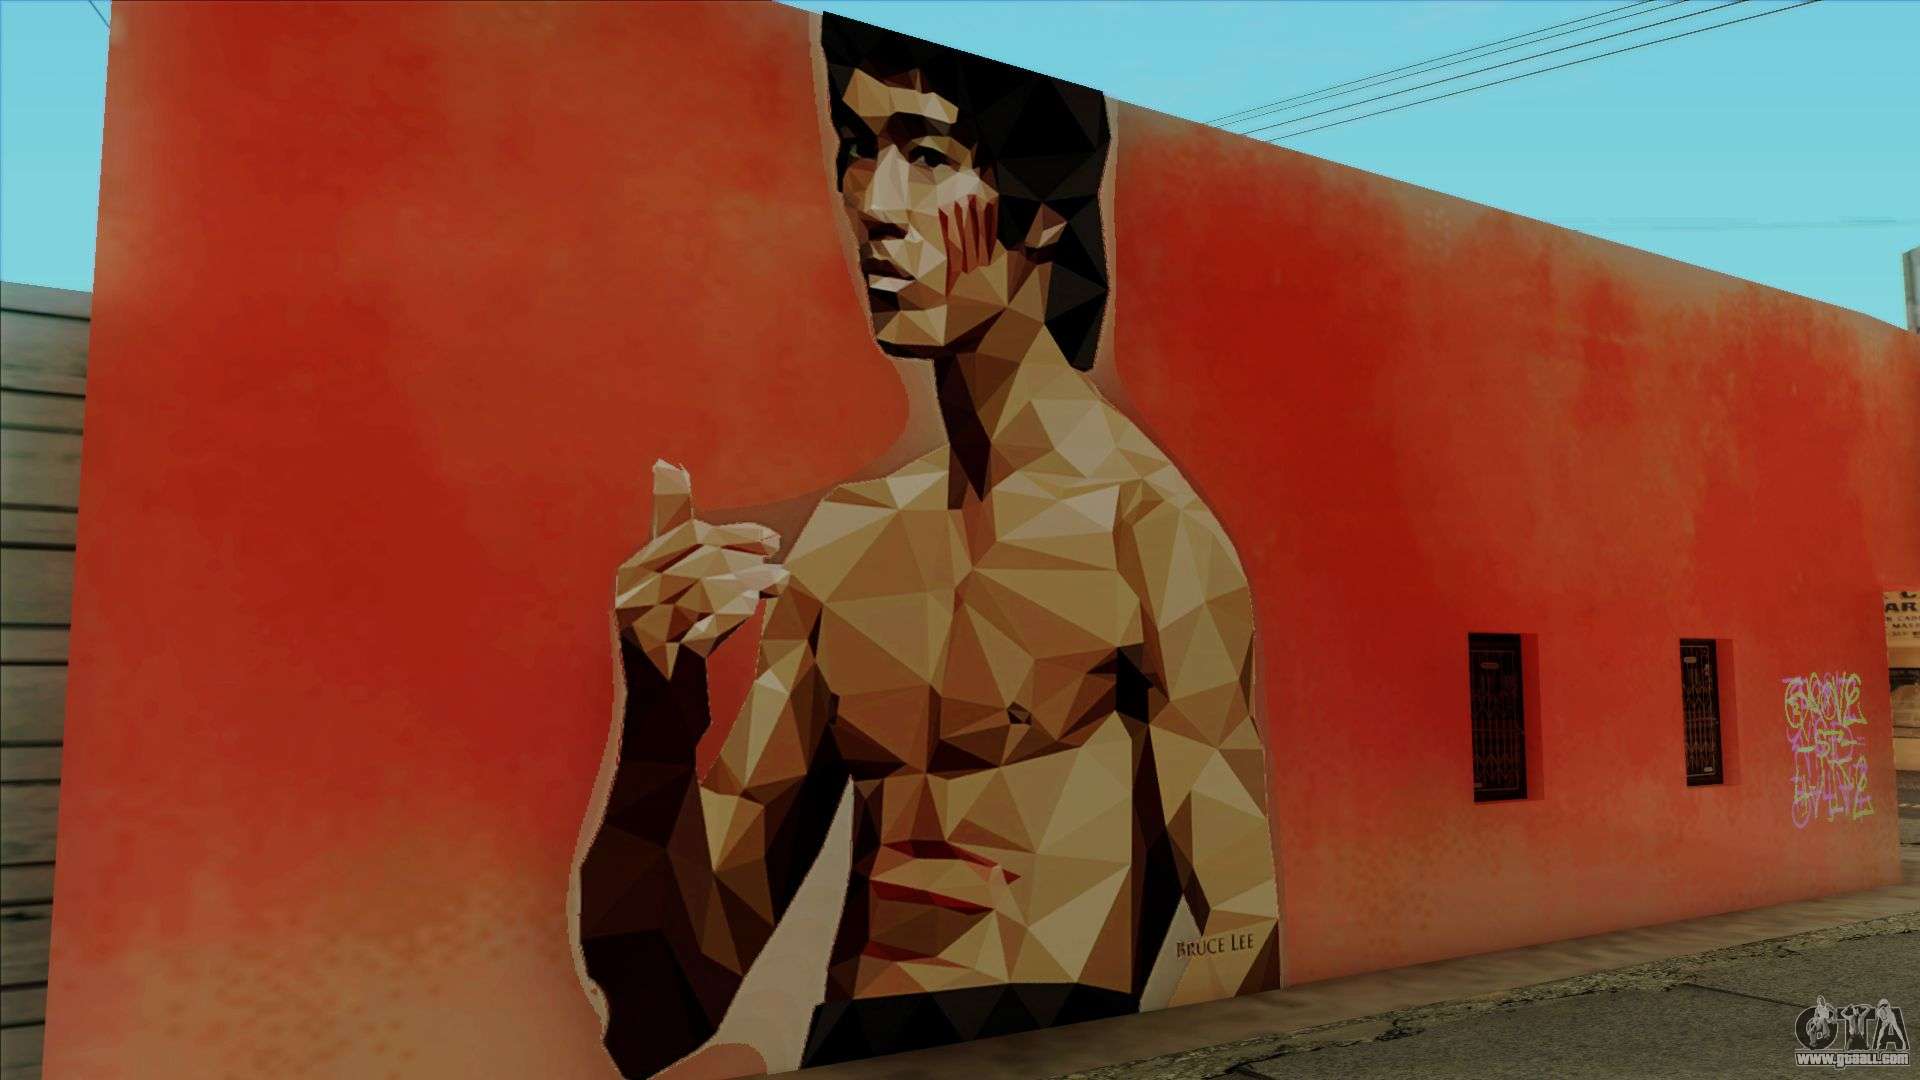 Bruce Lee Art Wall for GTA San Andreas